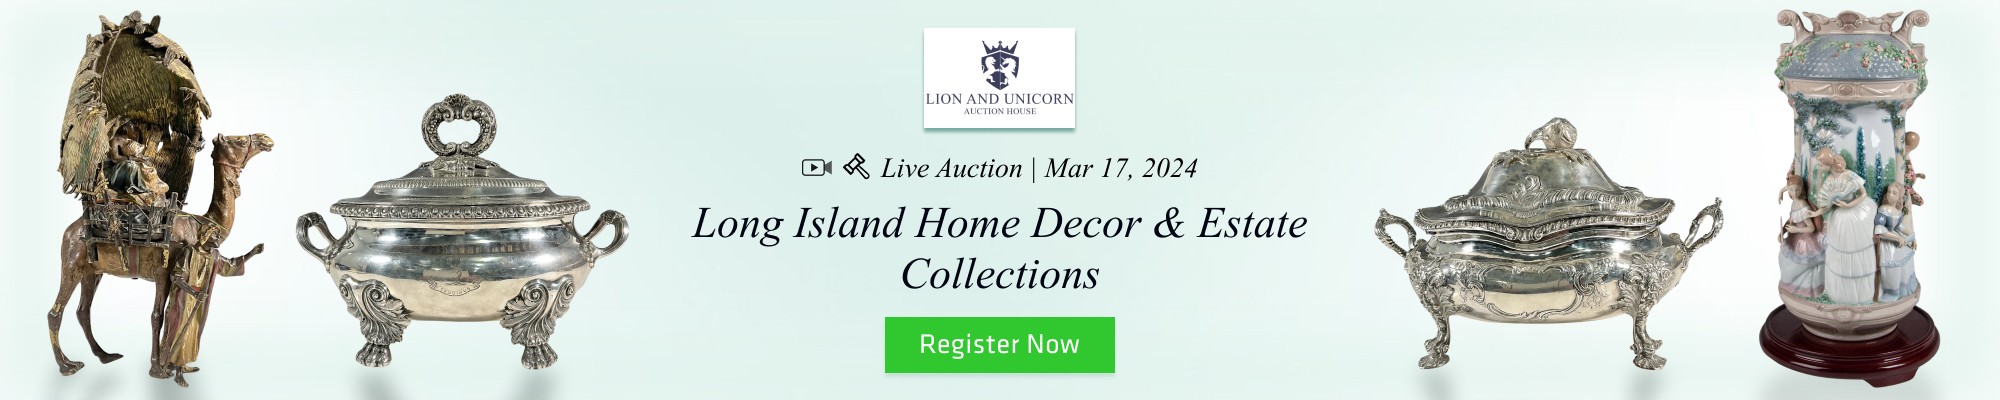 Long Island Home Decor & Estate Collections